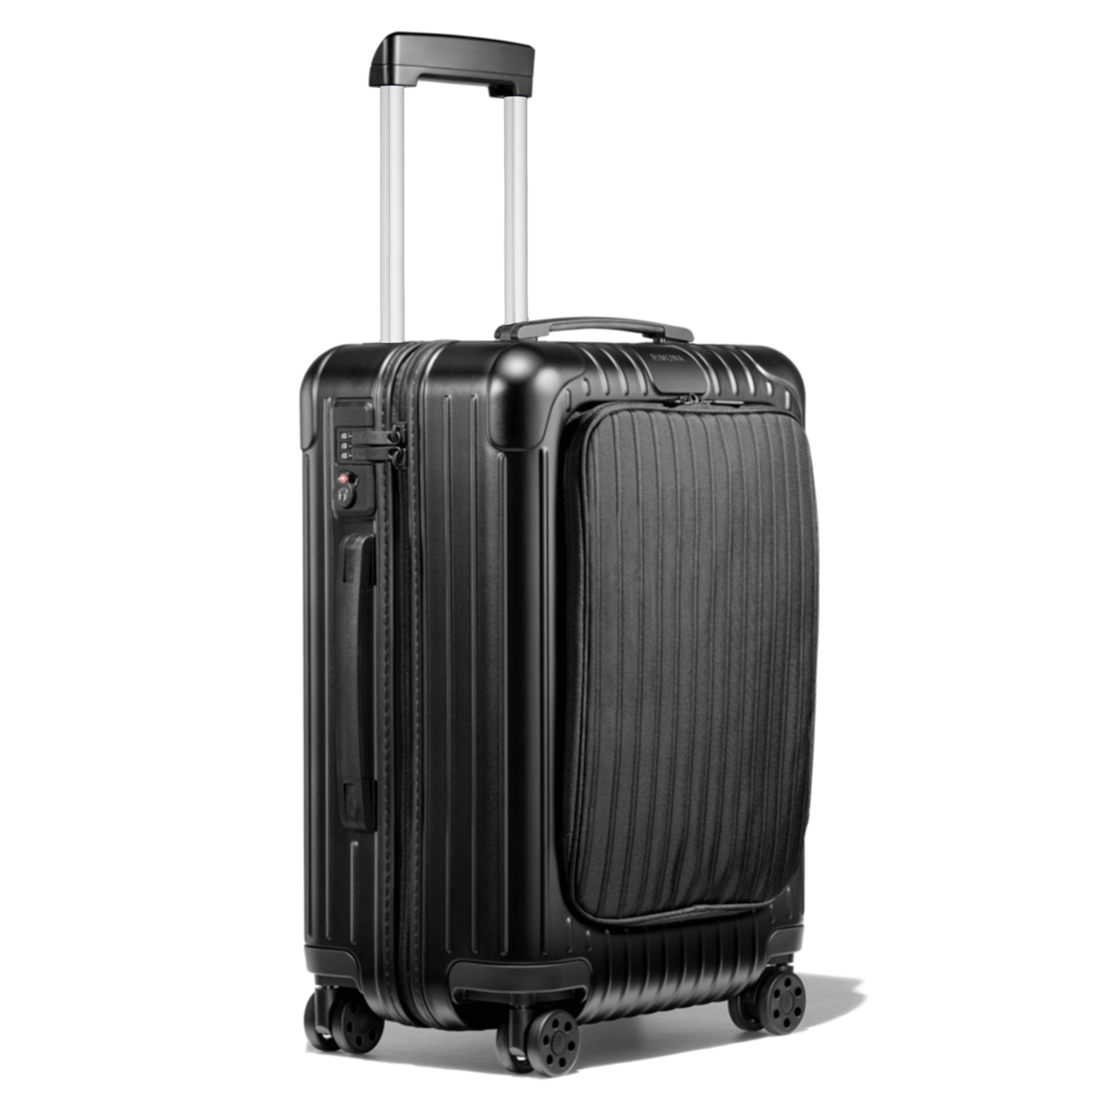 Rimowa Original Cabin Suitcase - Black